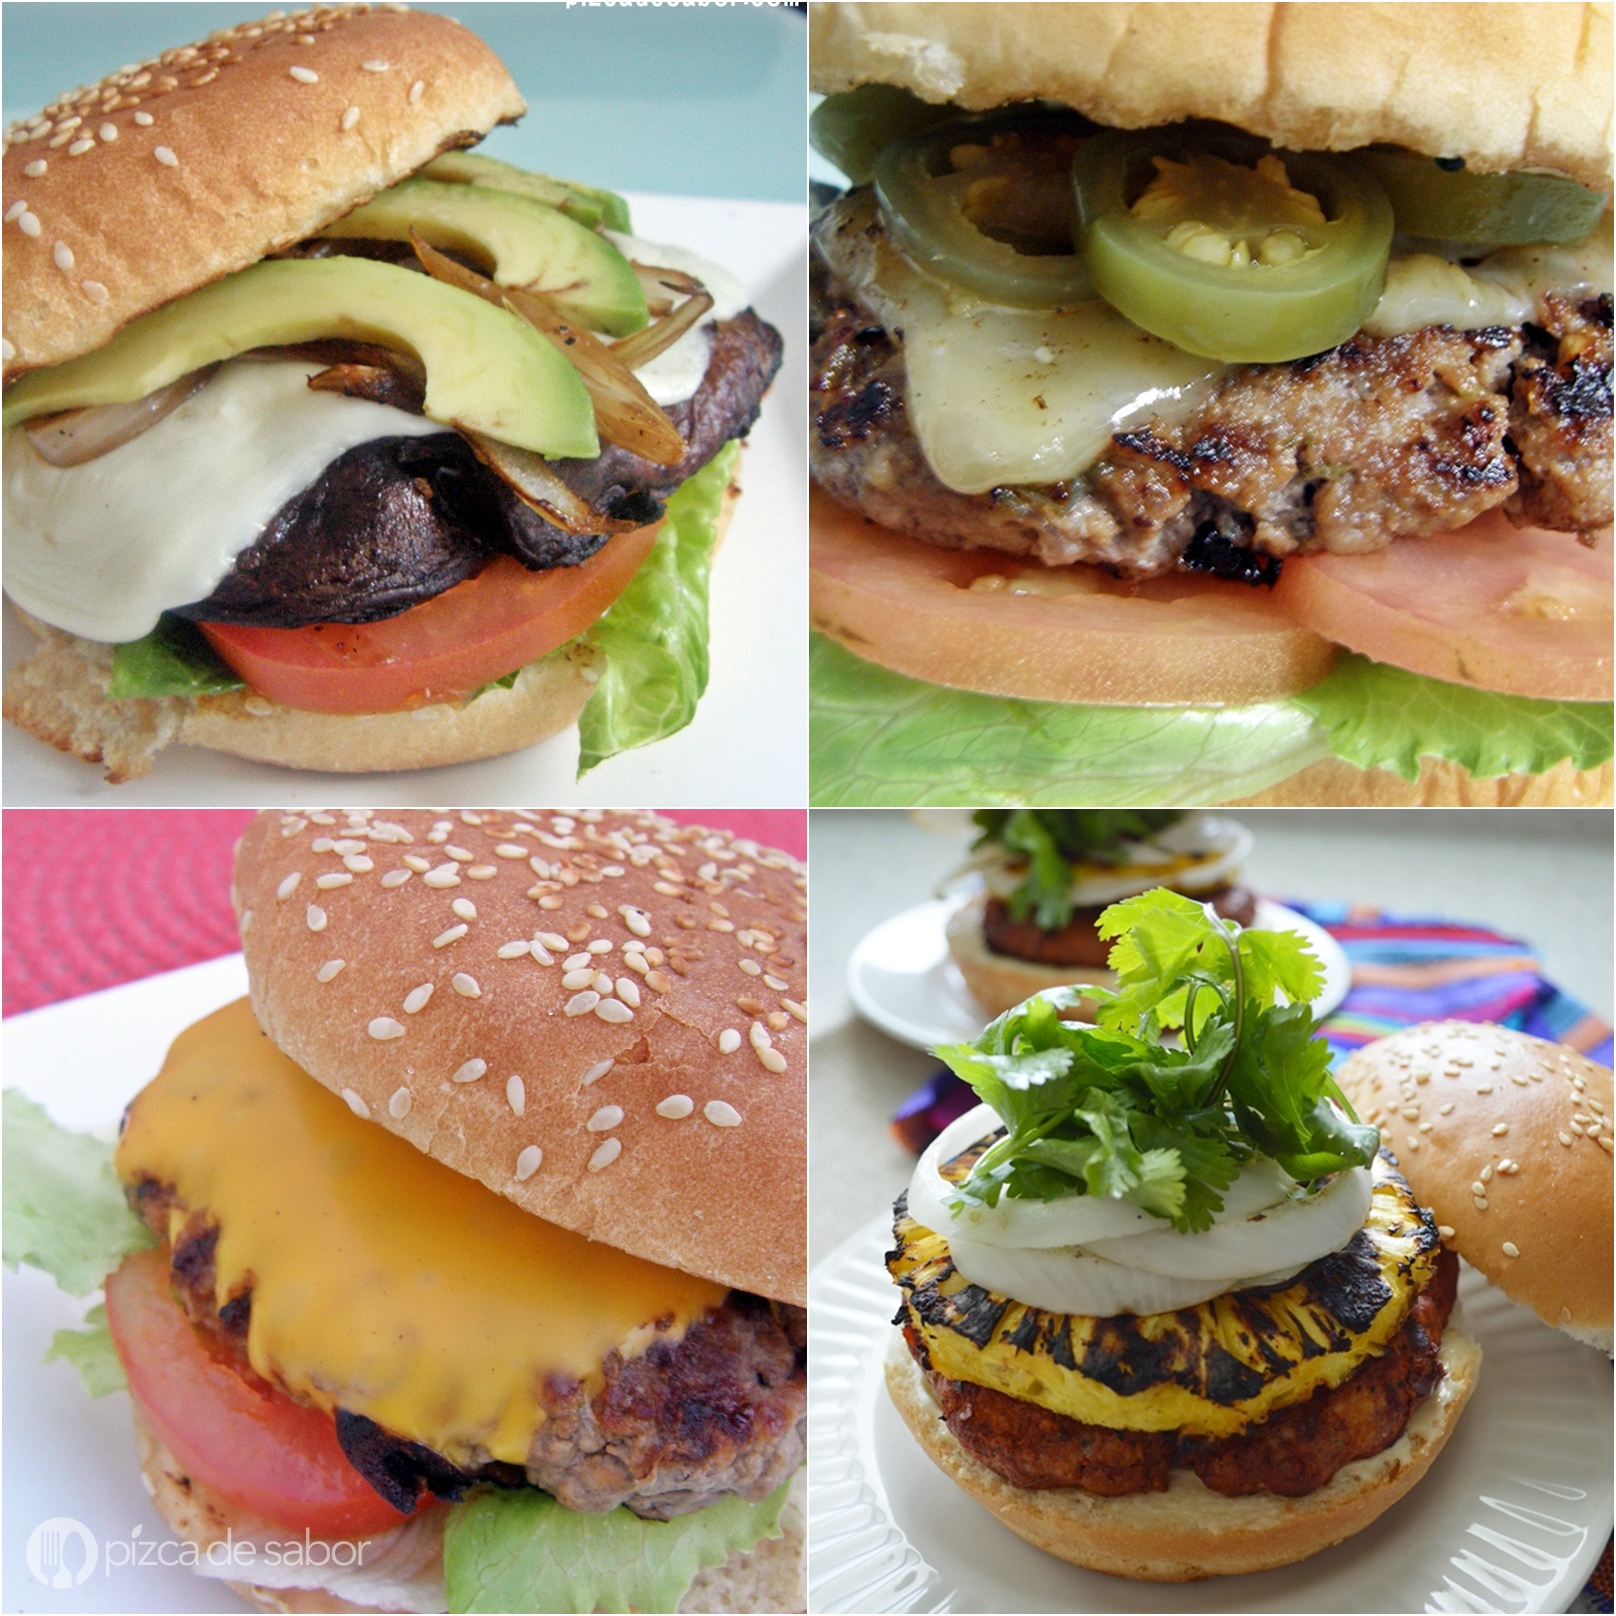 Día de la hamburguesa www.pizcadesabor.com